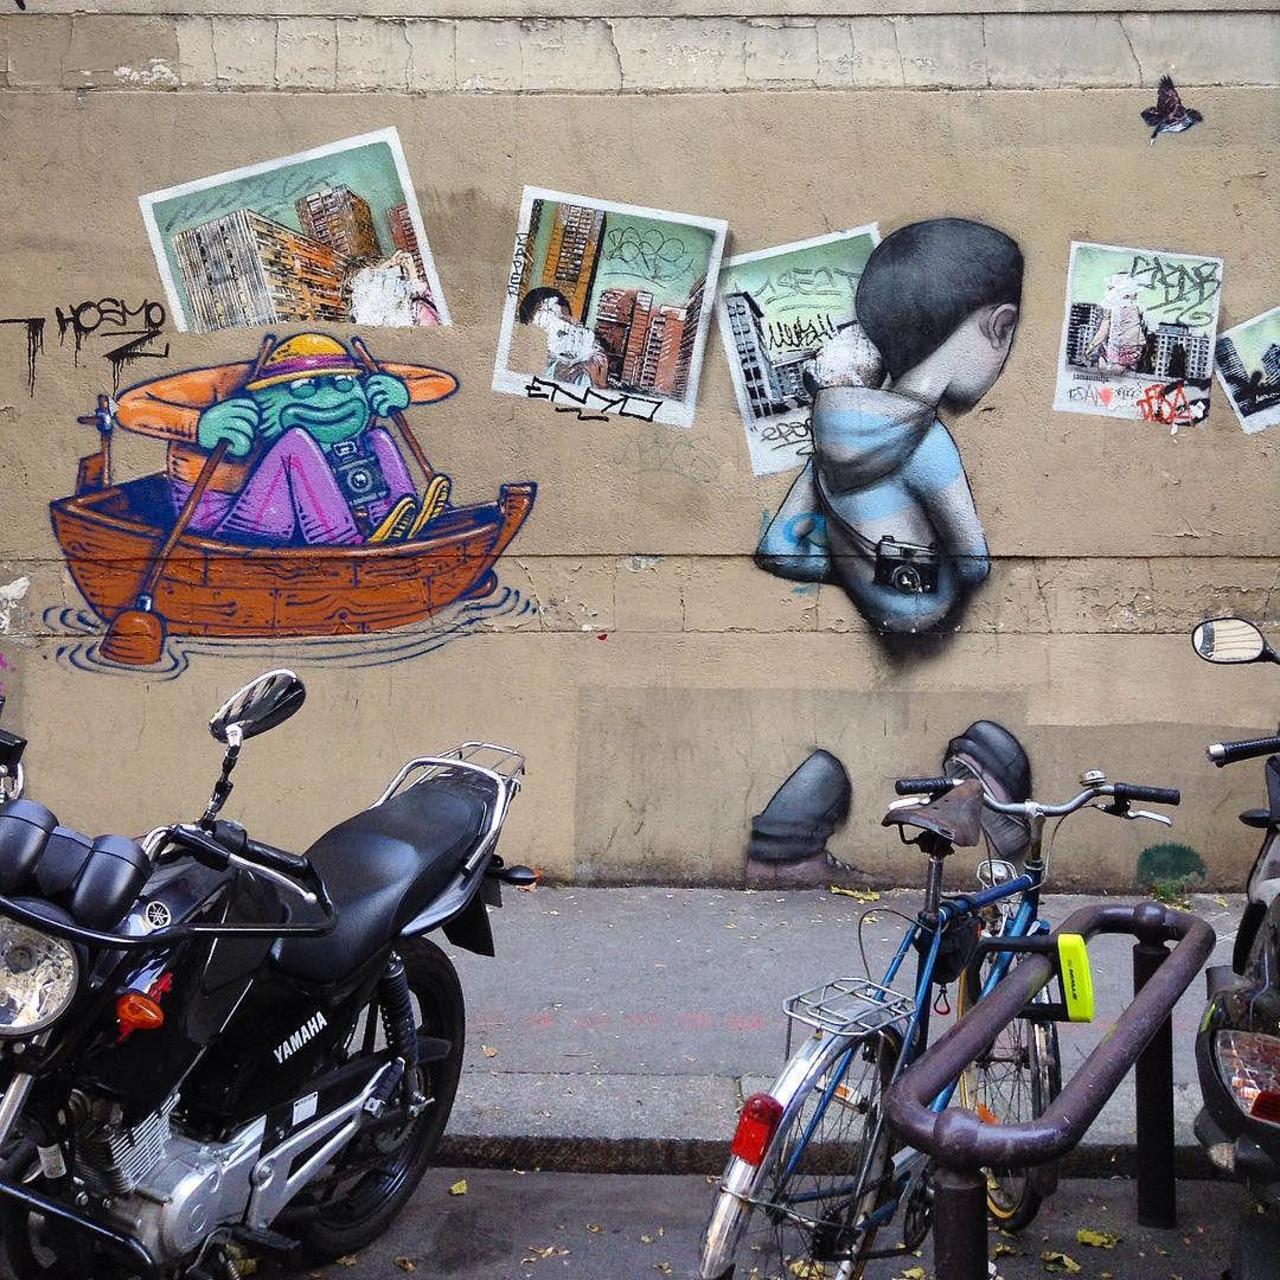 #Paris #graffiti photo by @fleurs.de.sel http://ift.tt/1WDYJuQ #StreetArt http://t.co/s803QlvulL